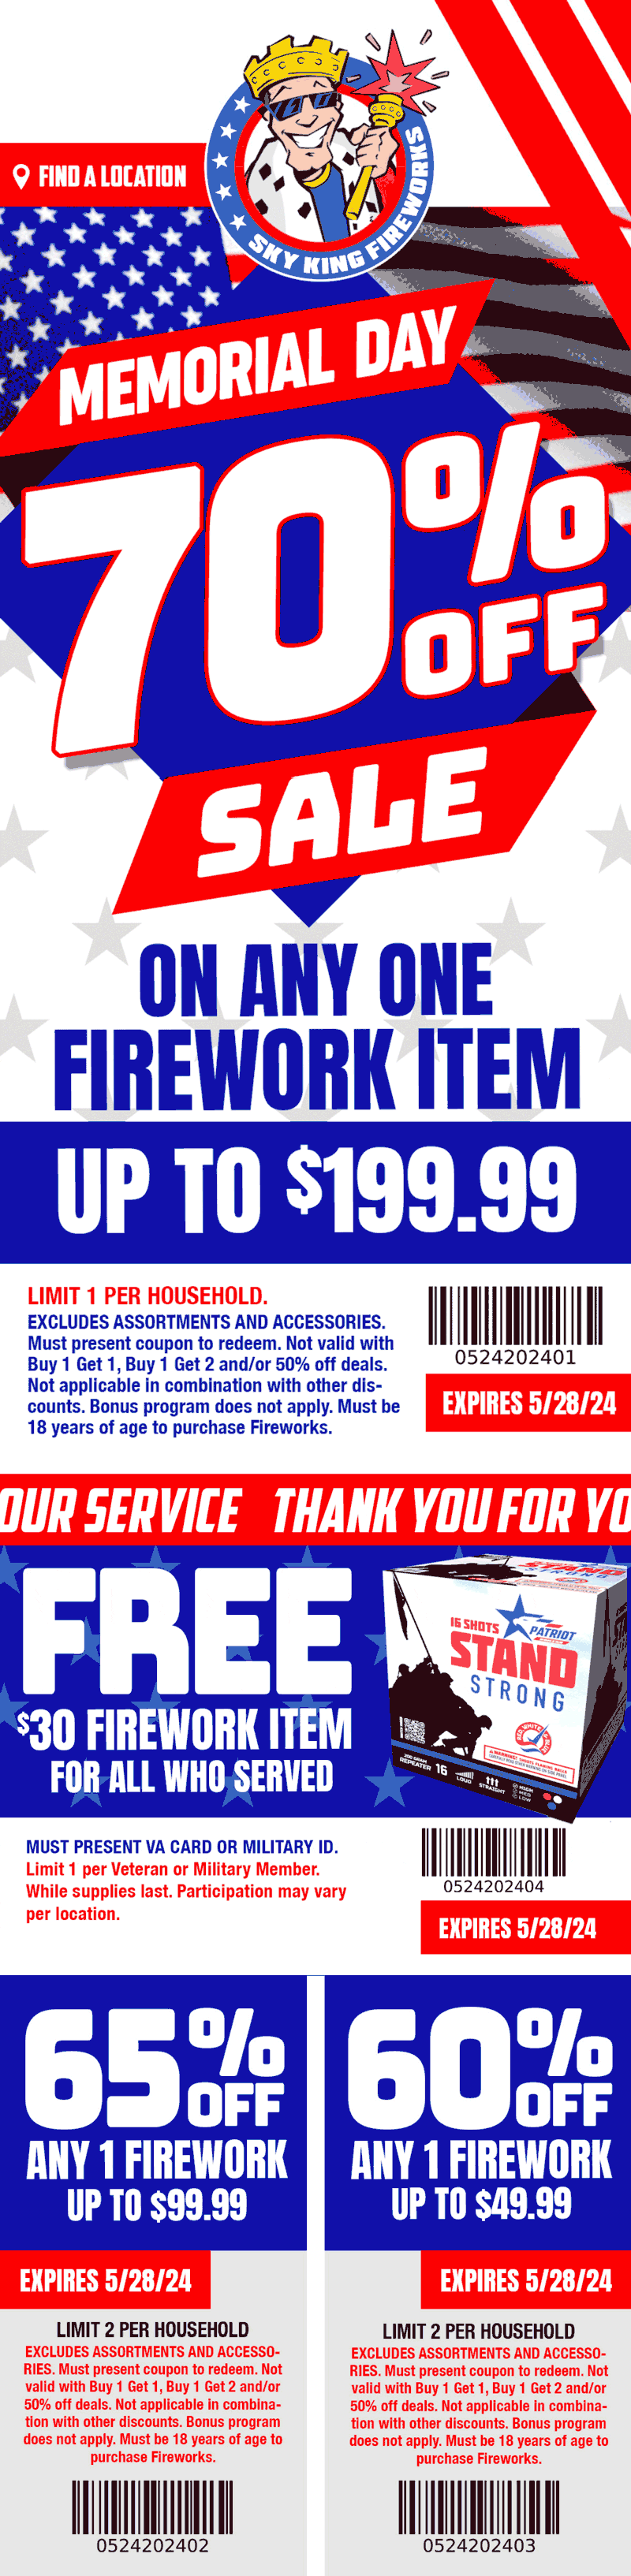 Sky King fireworks stores Coupon  Free $30 firework item for all who served & more at Sky King fireworks #skykingfireworks 